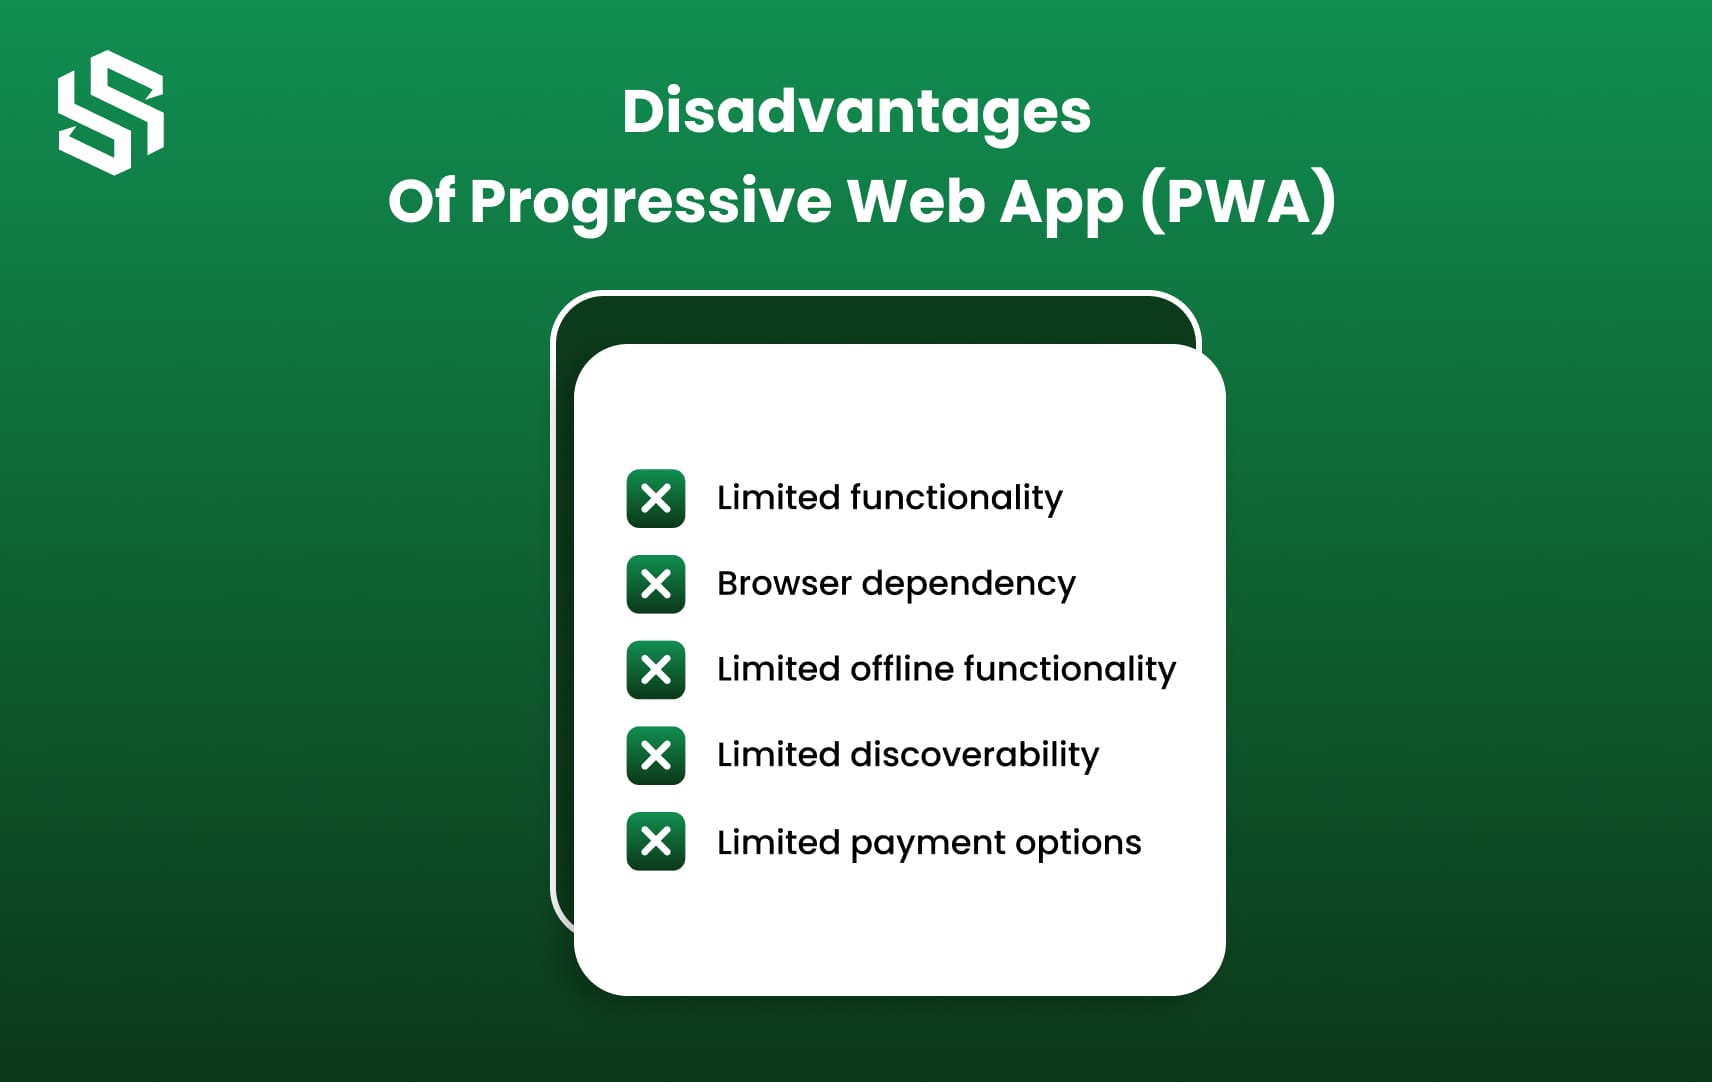 Disadvantages of Progressive Web Apps (PWAs)